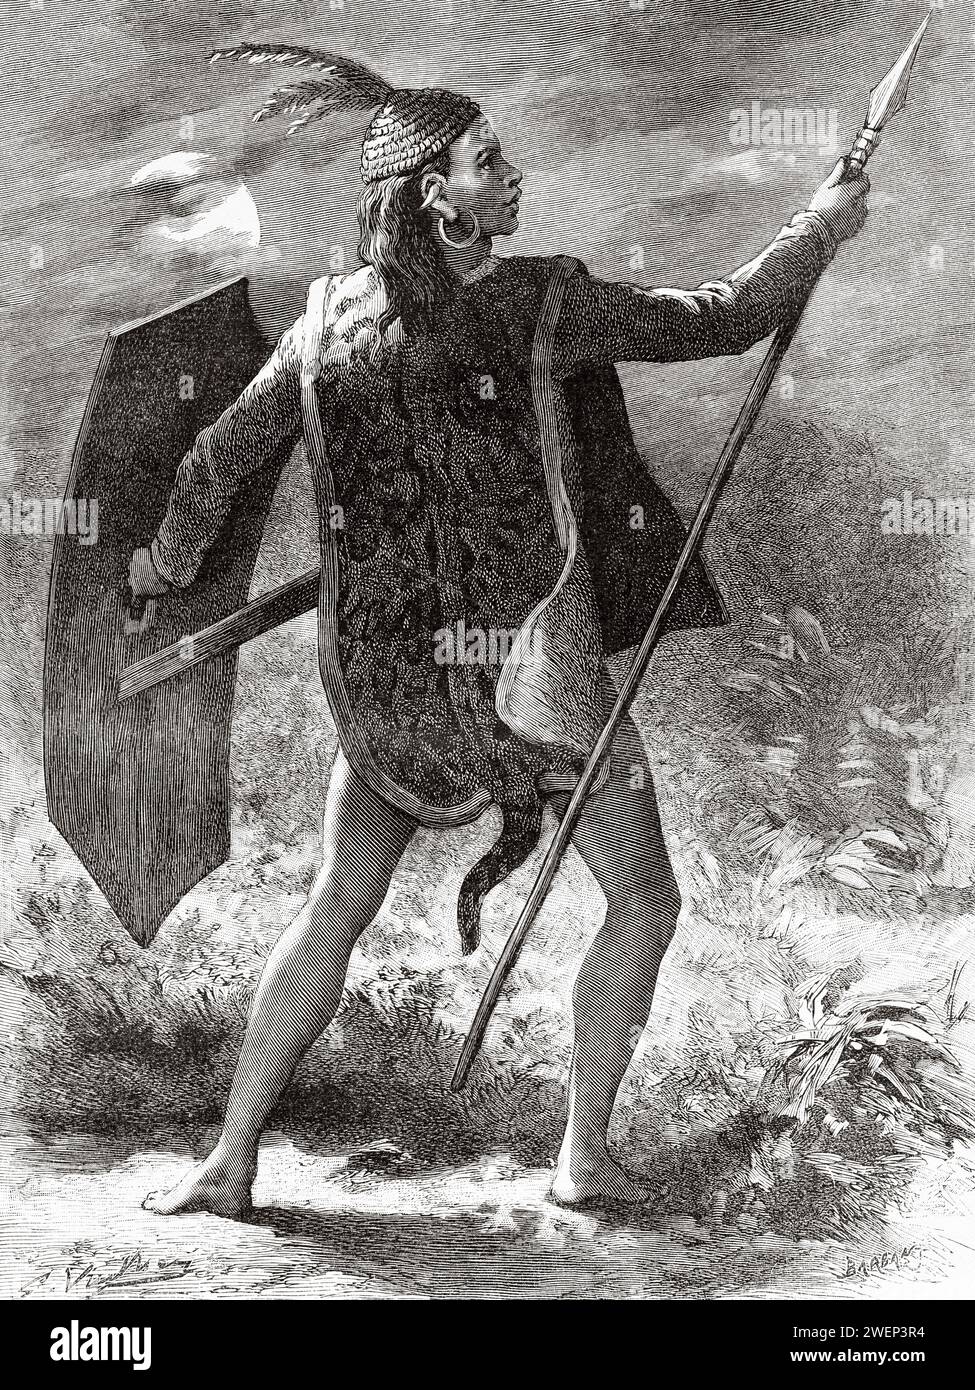 Warrior of Tjoudjoung-Mondjout Dayak, Kalimantan. Borneo Island, Indonesia. From Koutei to Banjarmasin, a journey through Borneo by Carl Bock (1849 - 1932) Stock Photo